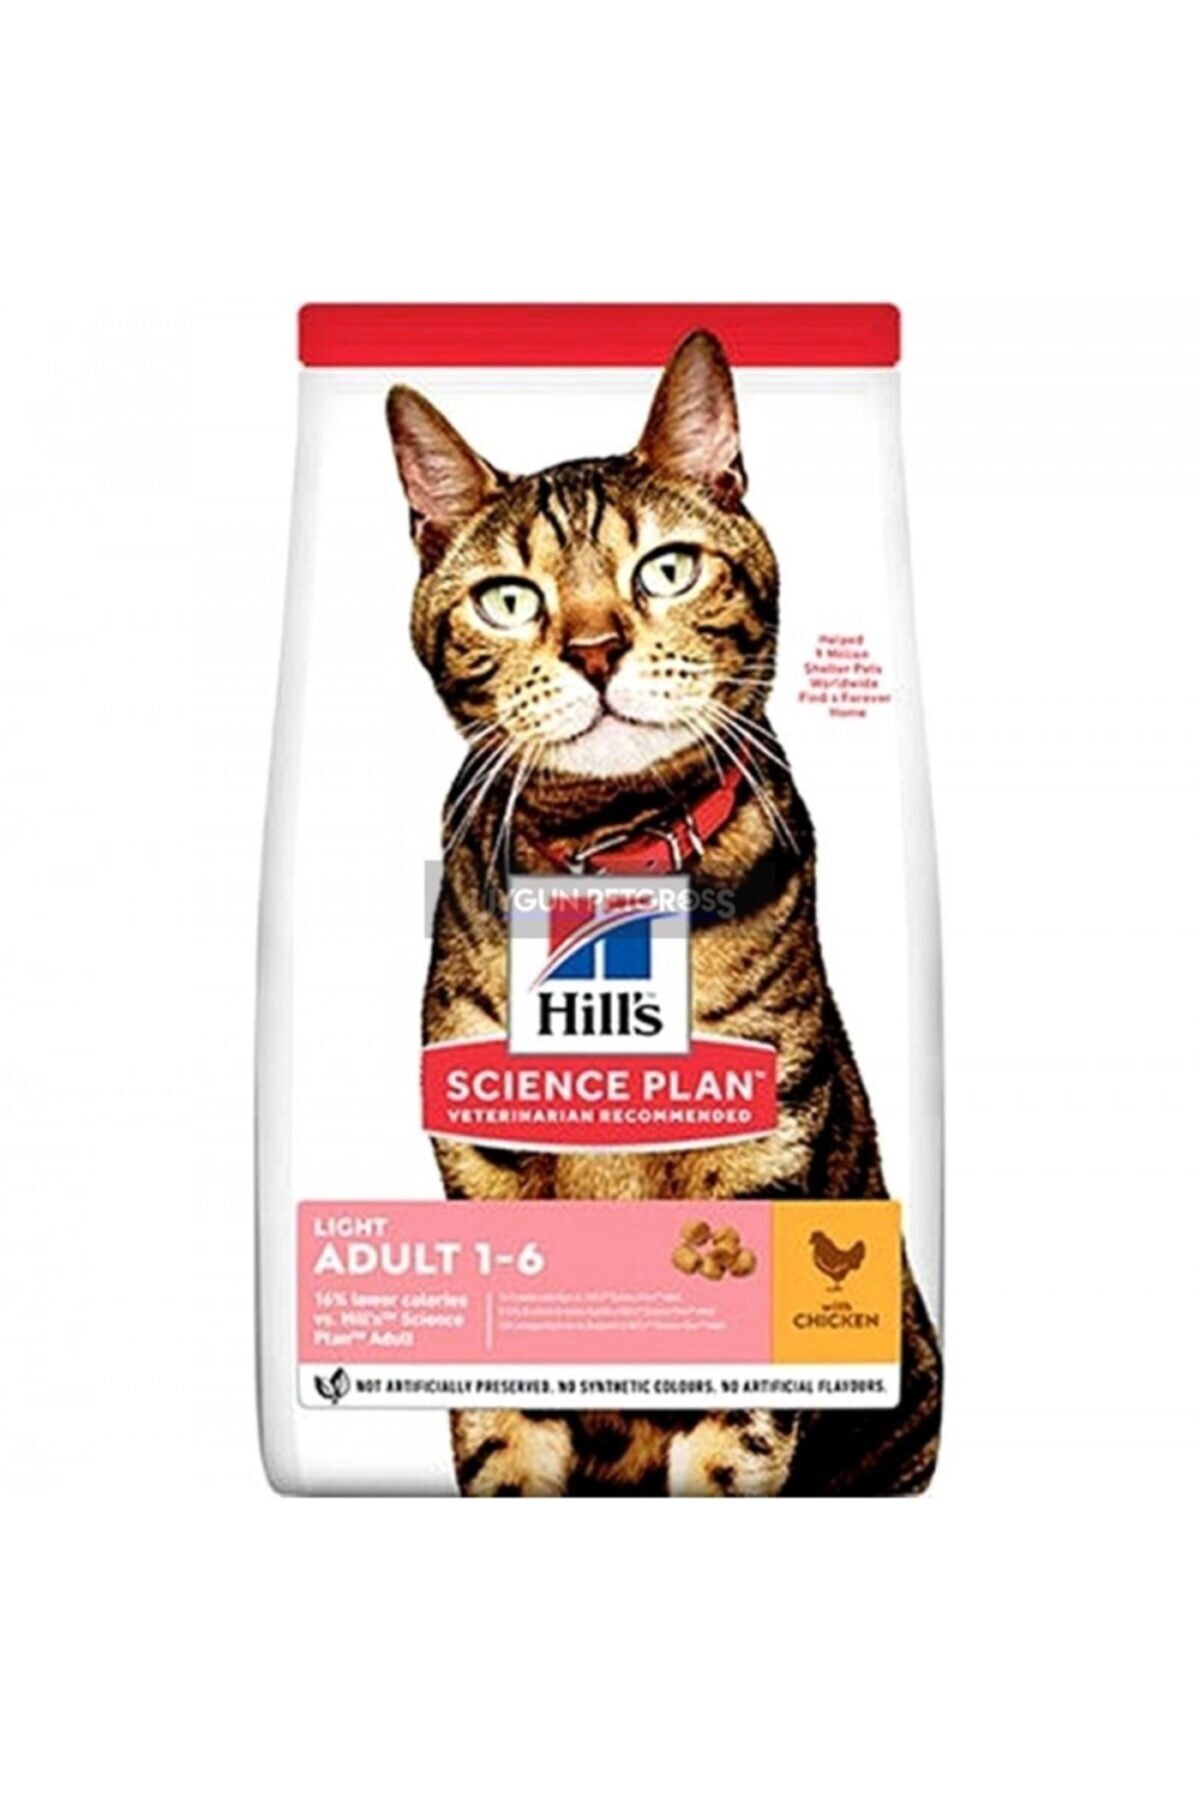 Hills Science Plan Hills Light Tavuklu Diyet Yetişkin Kedi Maması 1.5 Kg